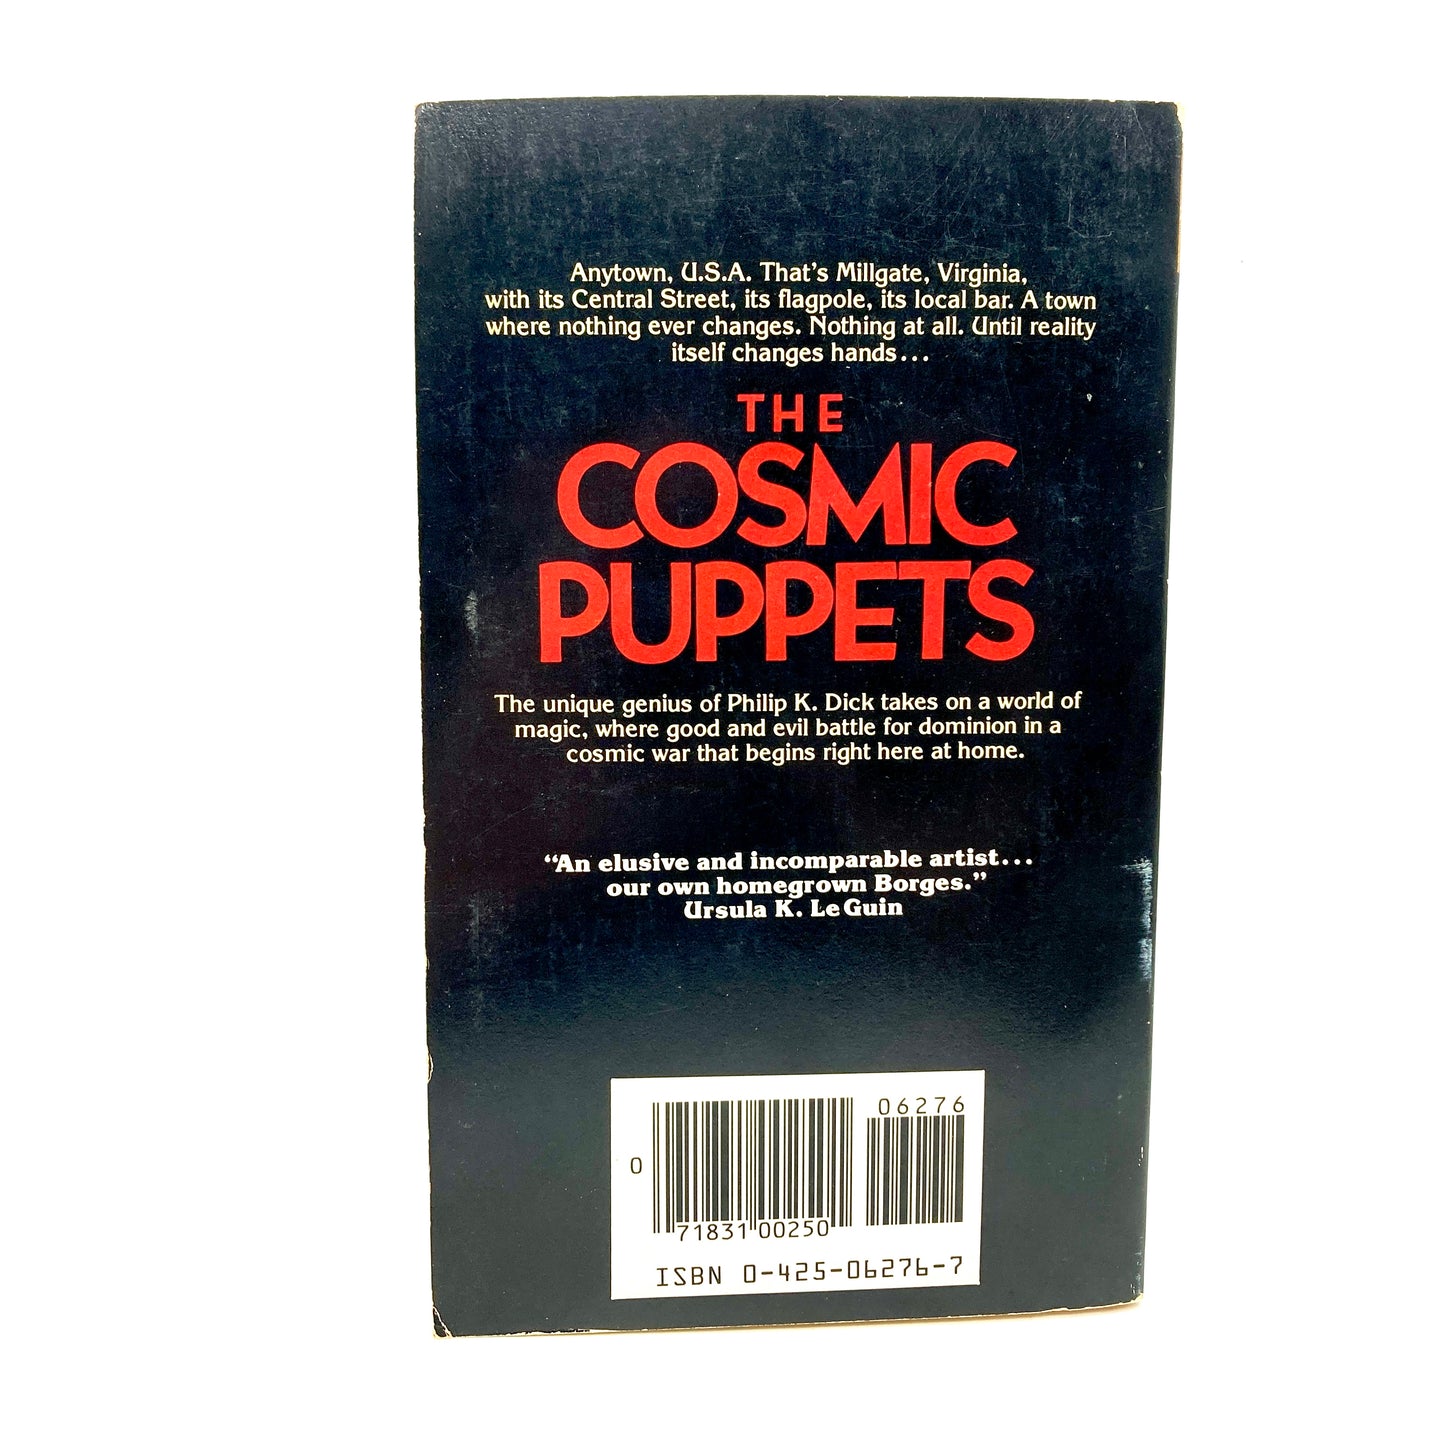 DICK, Philip K. "The Cosmic Puppets" [Berkley, 1983]